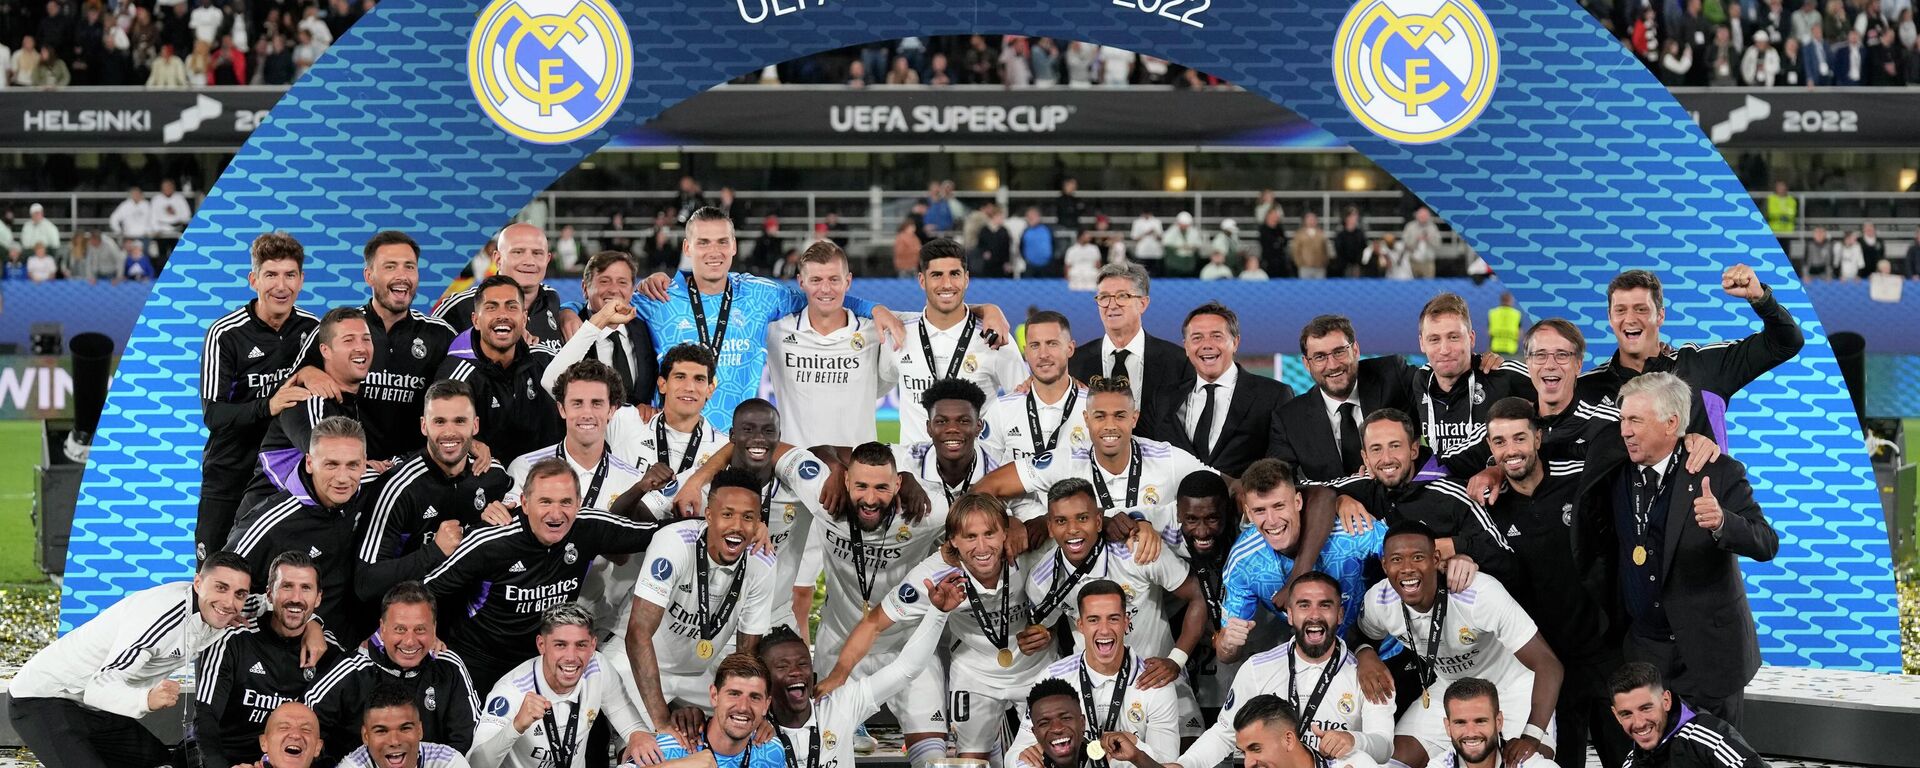 Real Madrid gana la Supercopa de UEFA por quinta vez - Sputnik Mundo, 1920, 10.08.2022